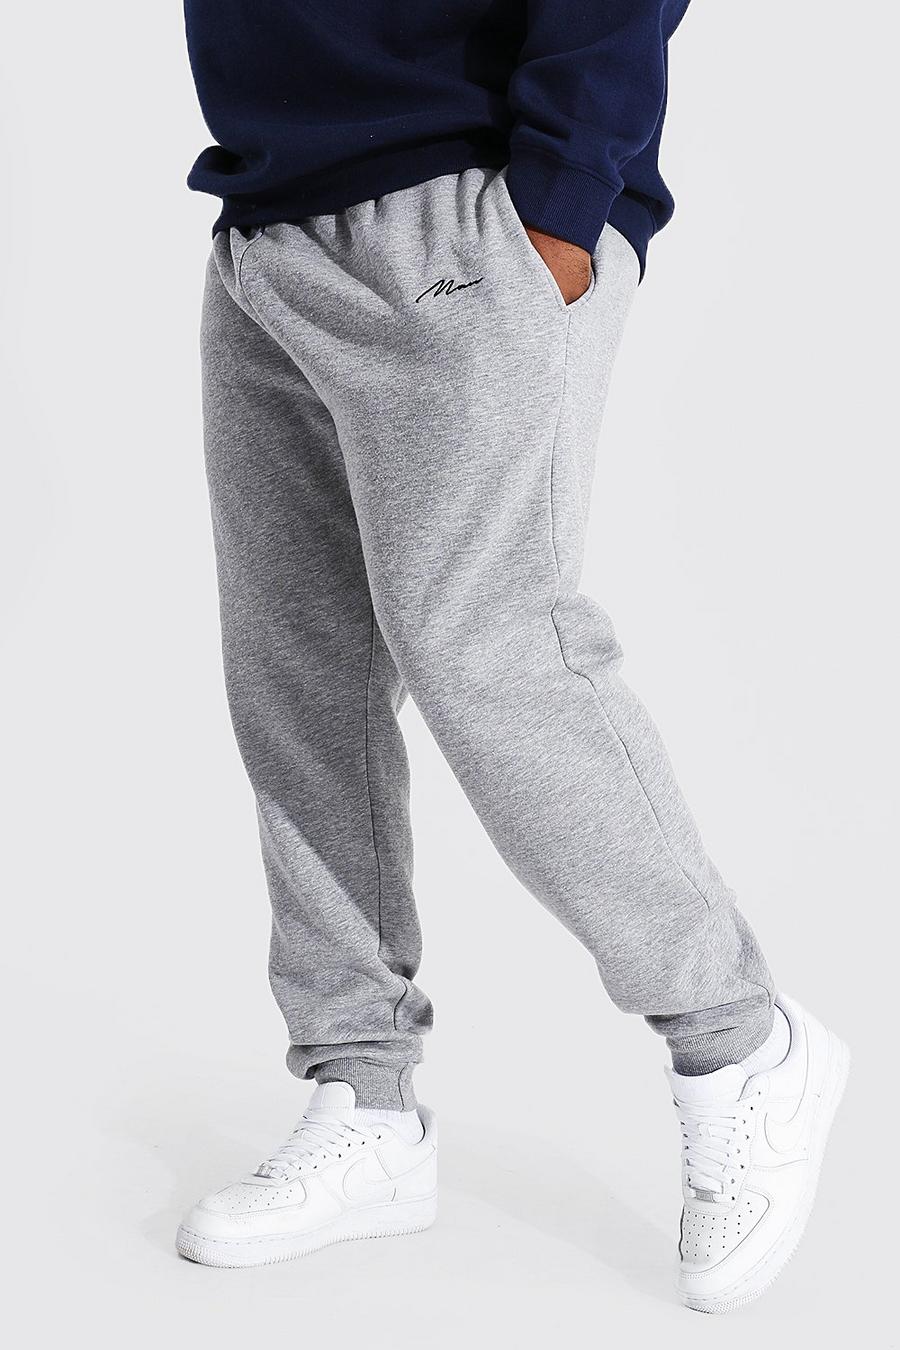 Pantaloni tuta Plus Size Slim Fit con scritta Man, Grey marl grigio